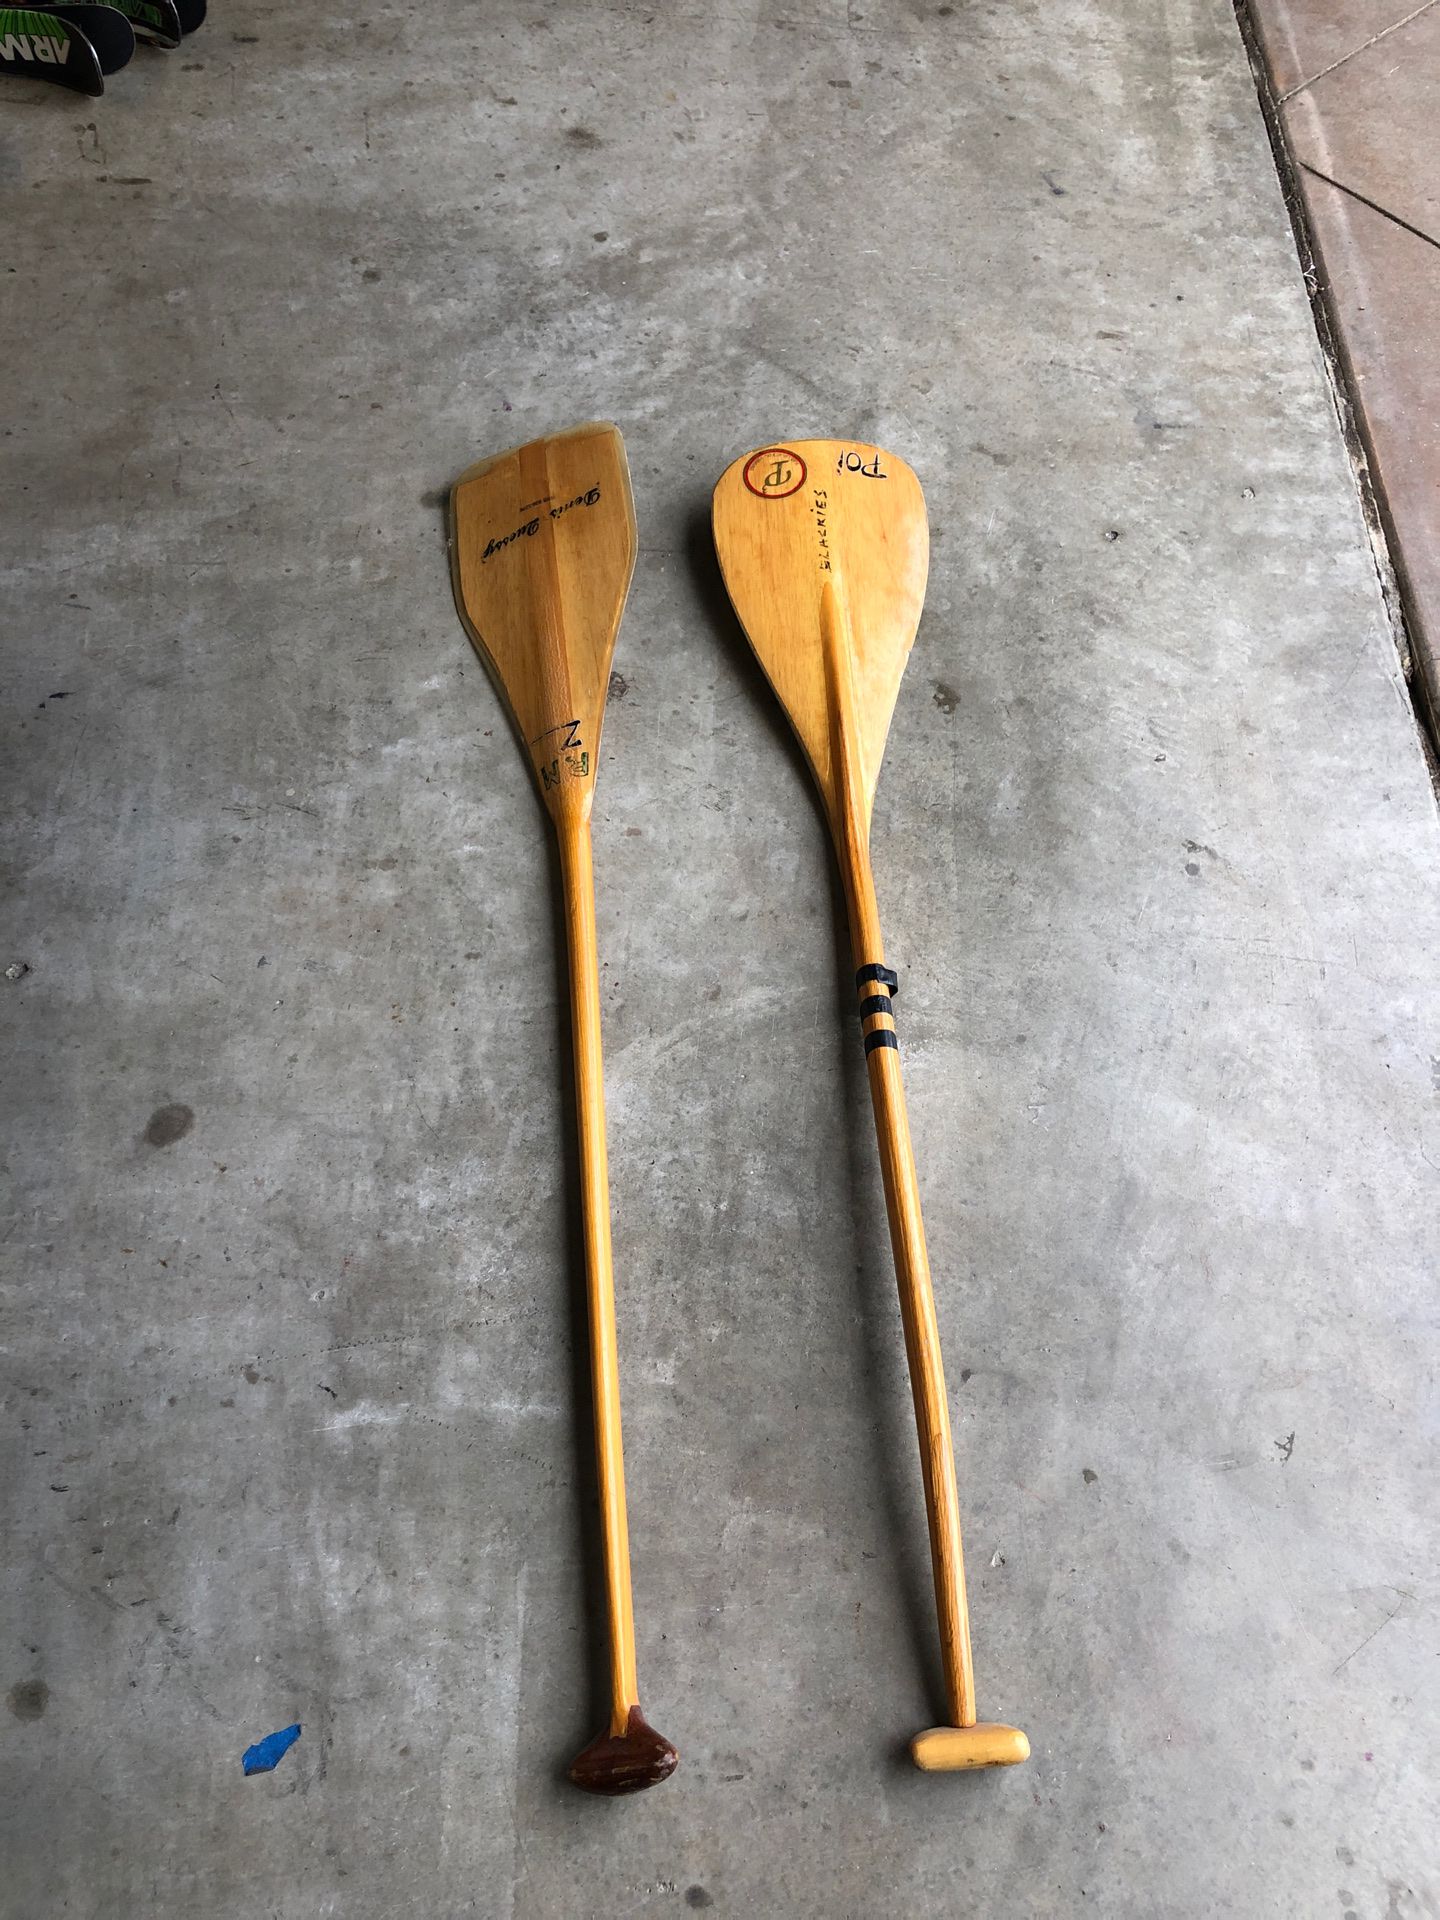 Outrigger canoe paddles